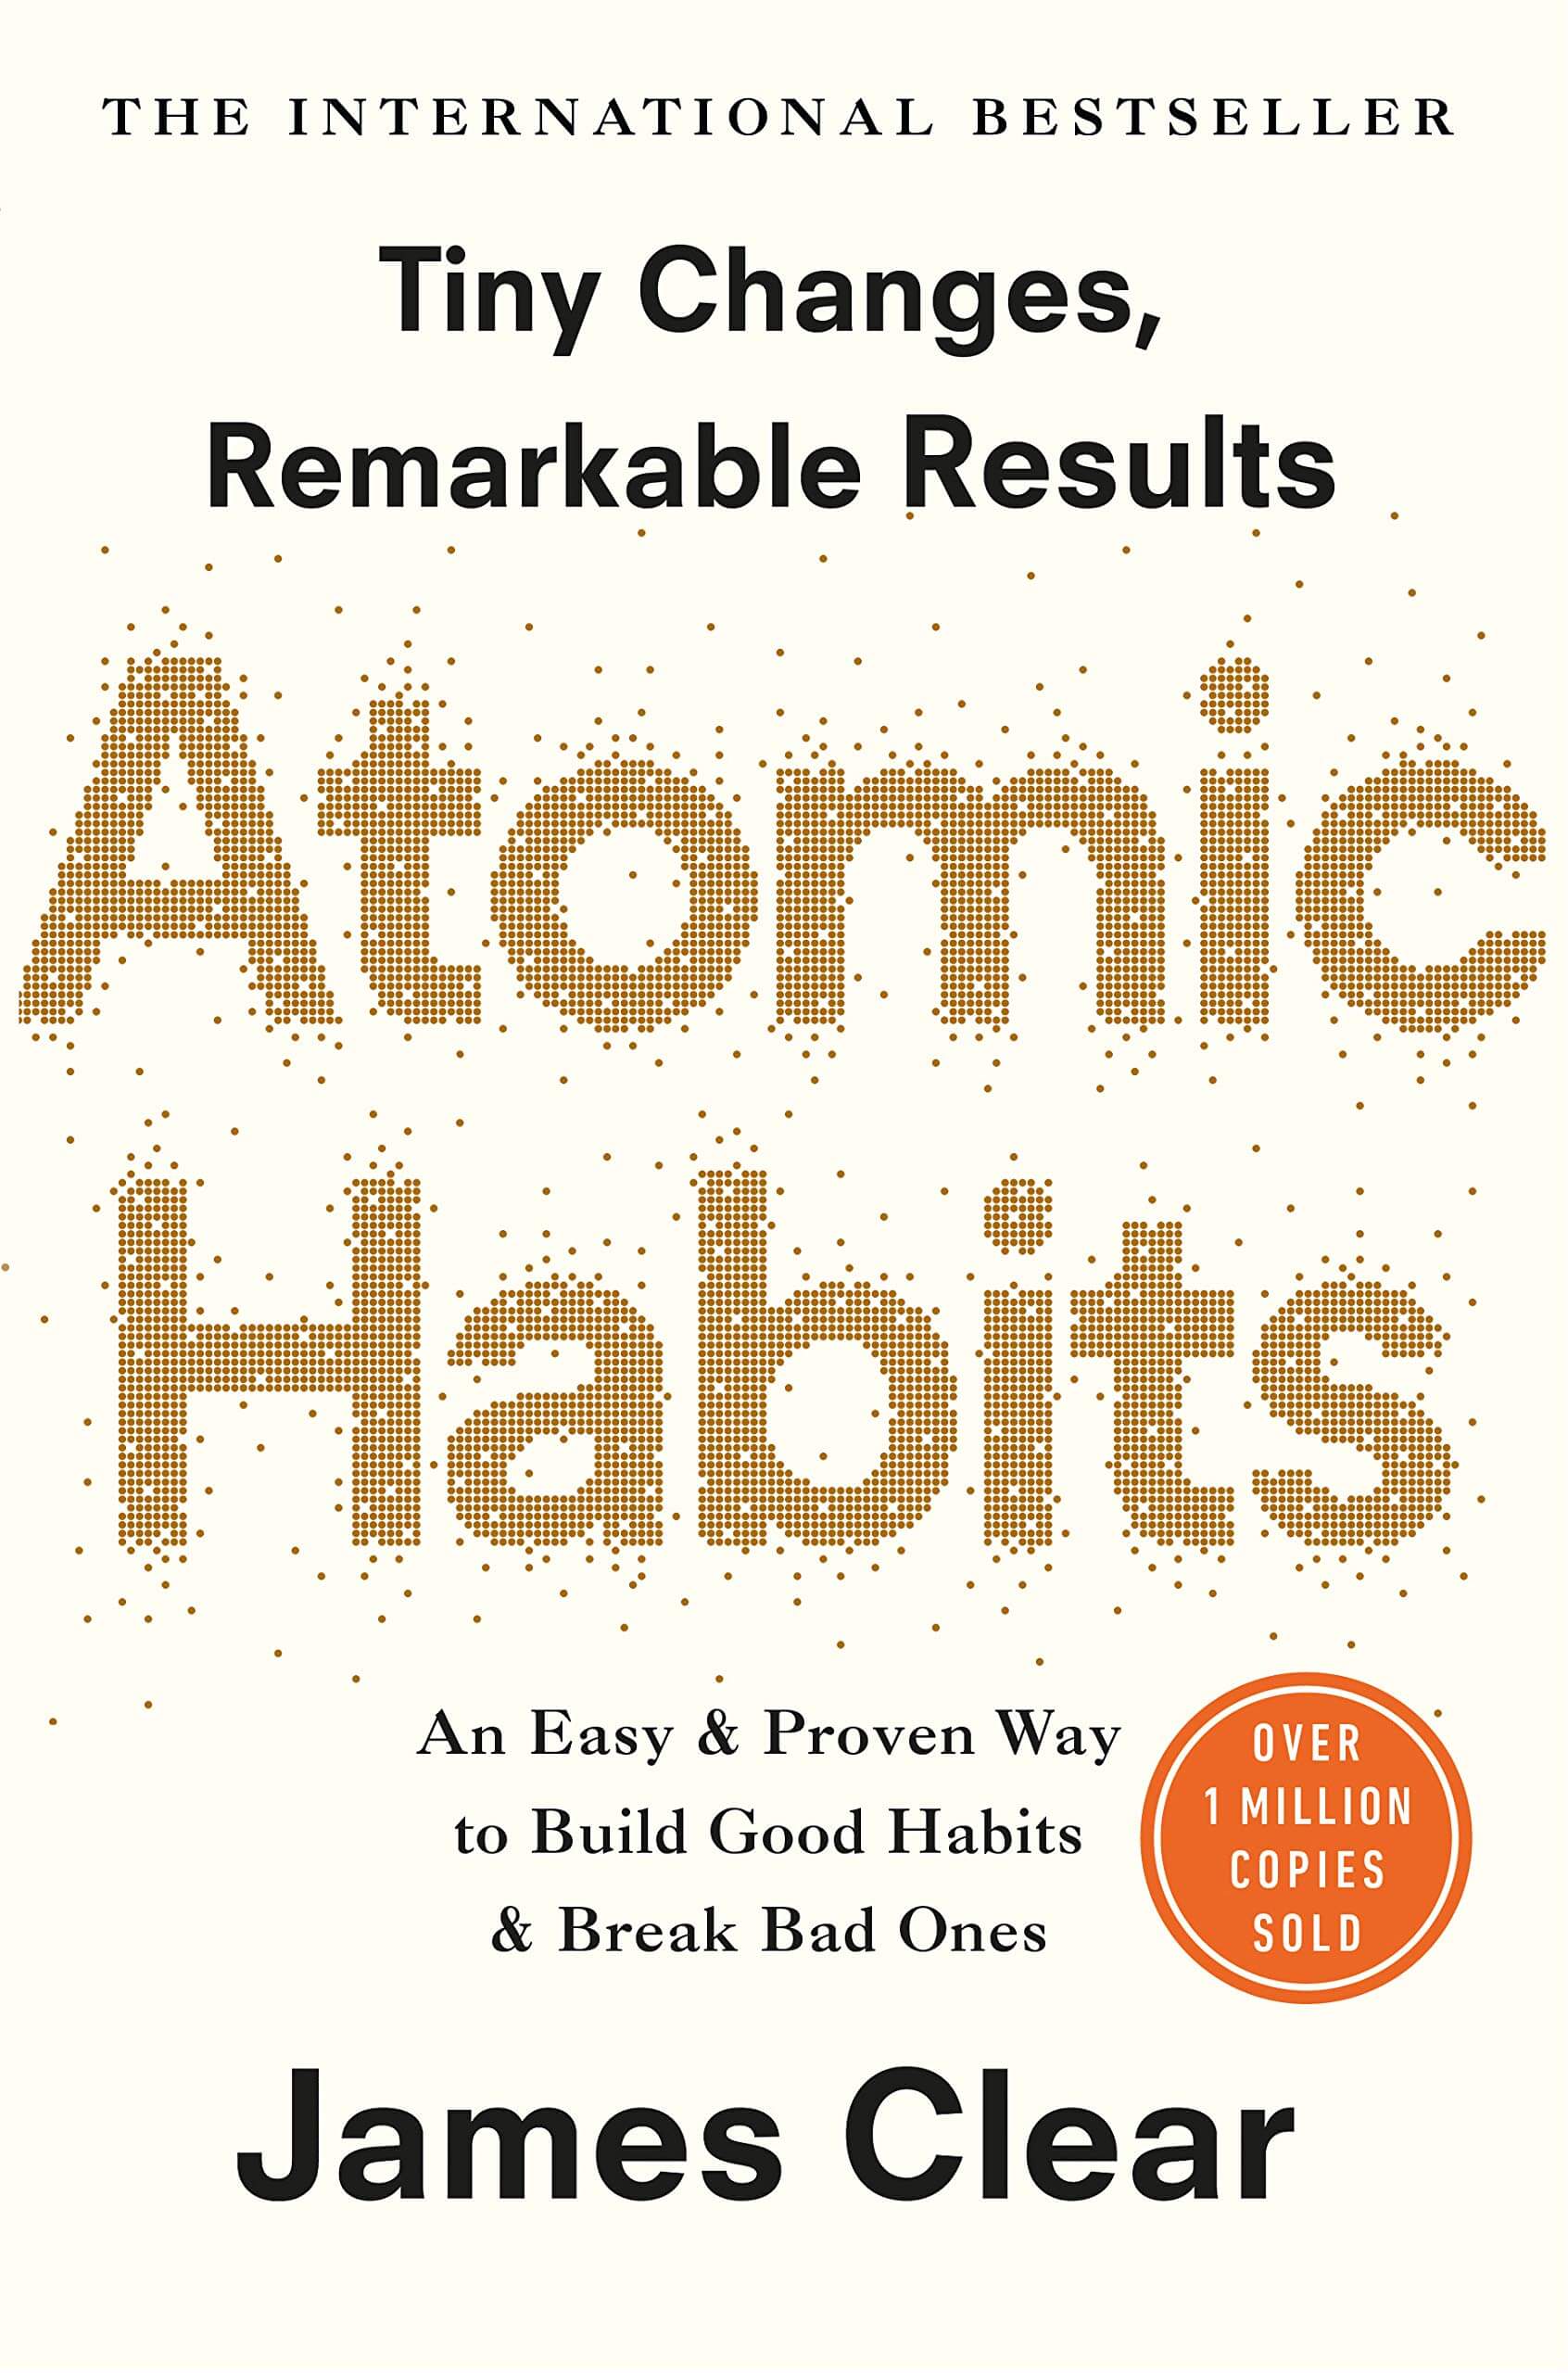 Atomic Habits (Hardcover, 2018, Avery, an Imprint of Penguin Random House LLC)